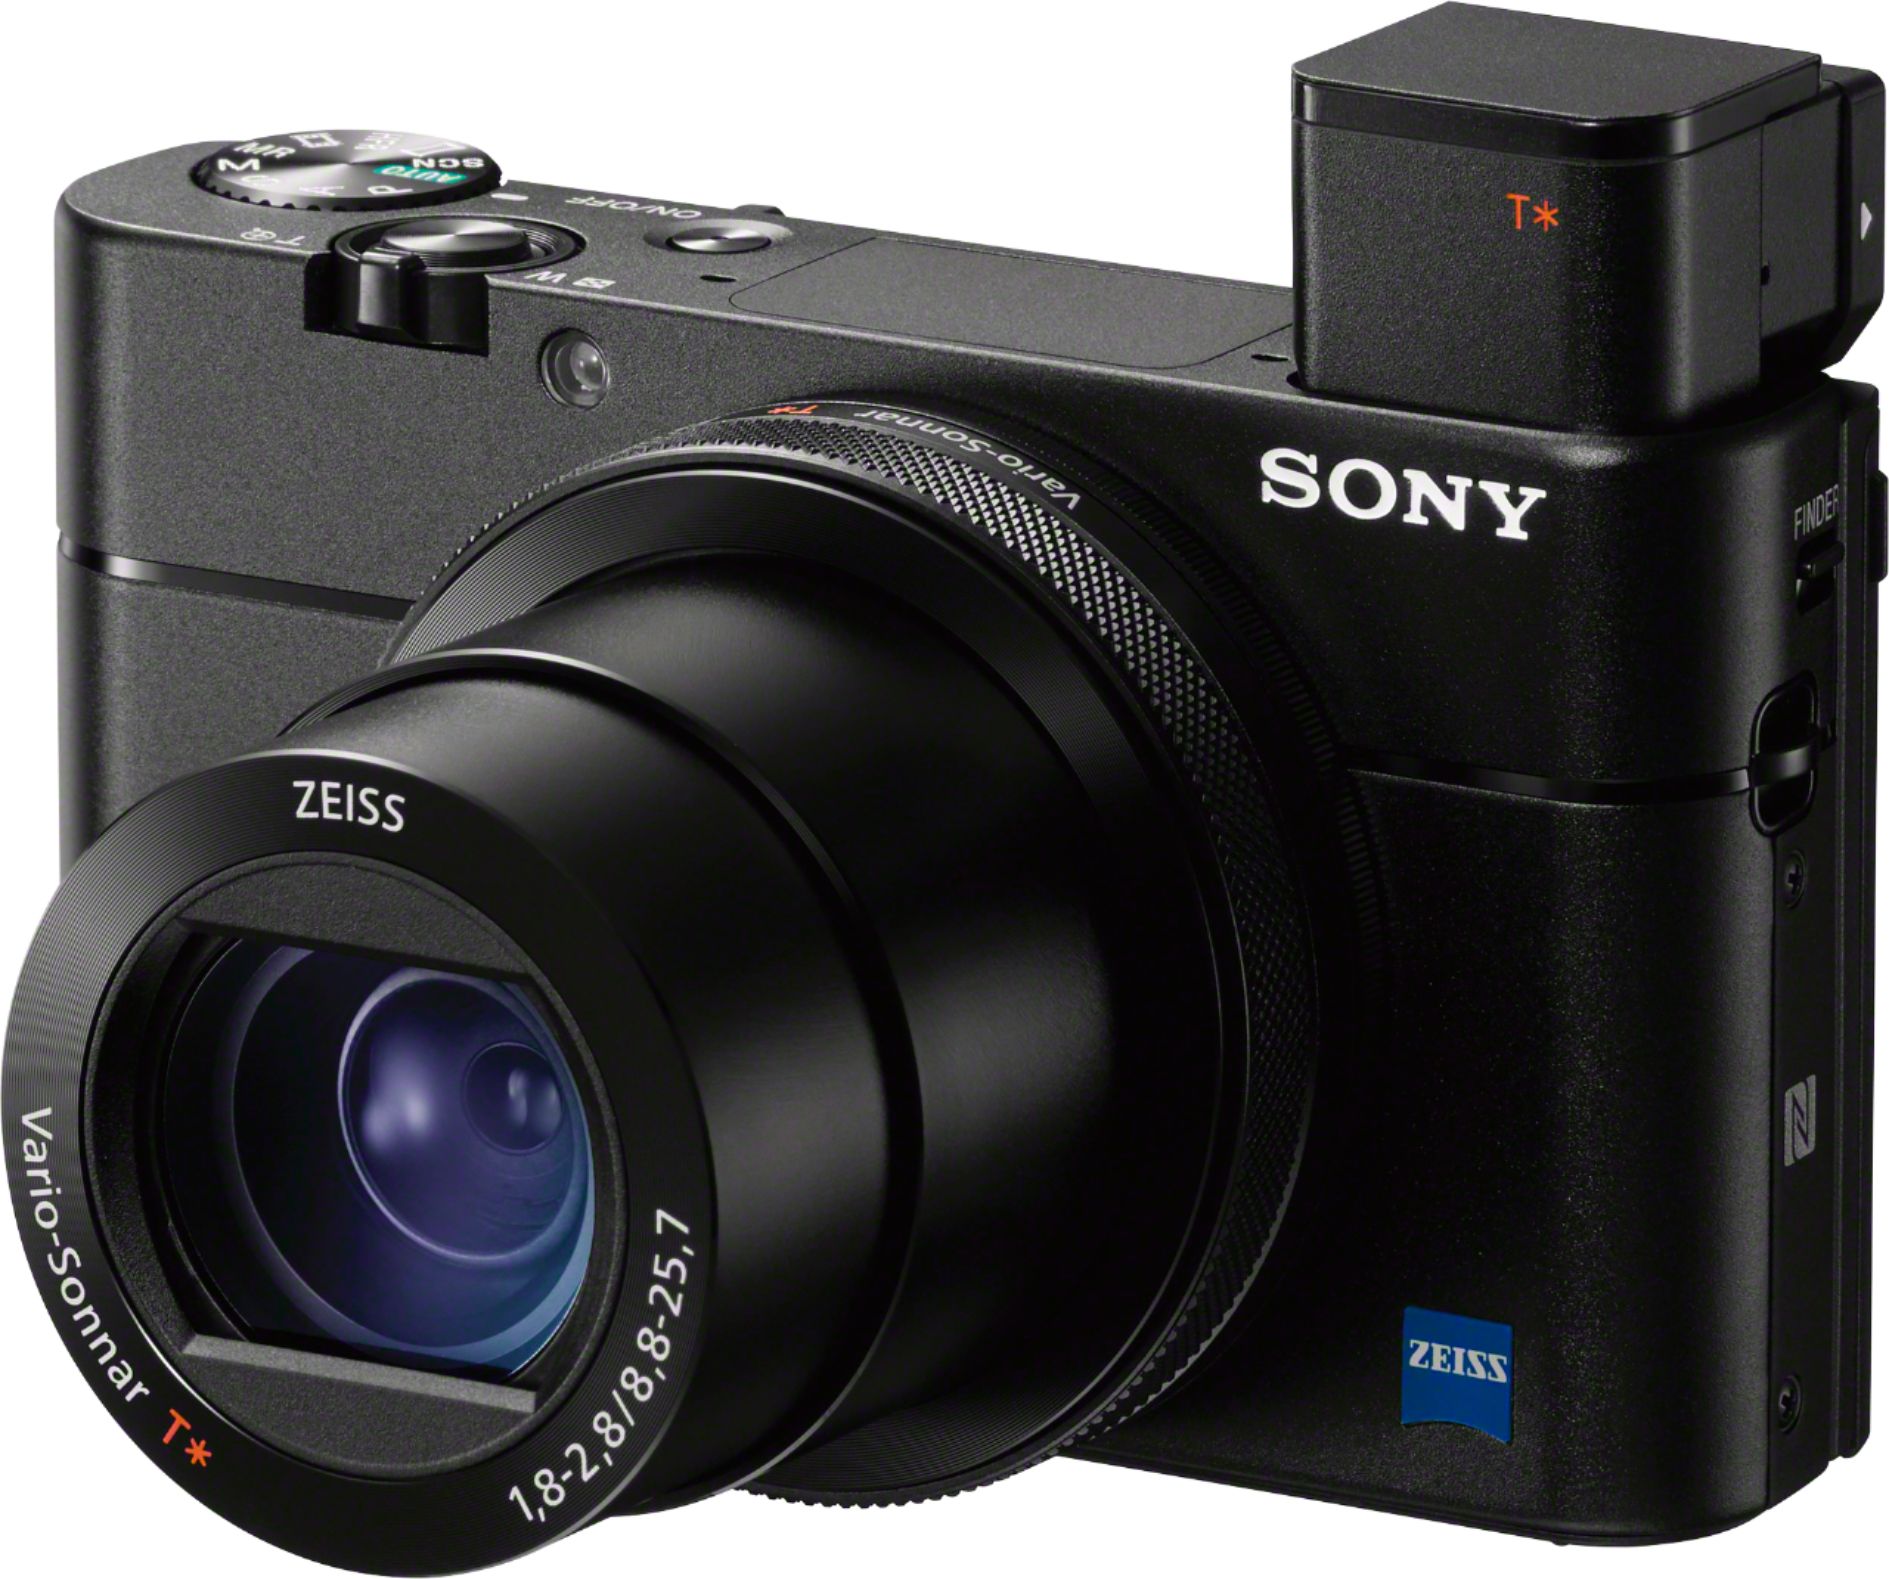 Sony Cyber-shot DSC-RX100 V 20.1-Megapixel Digital Camera Black DSCRX100M5A/B - Best Buy